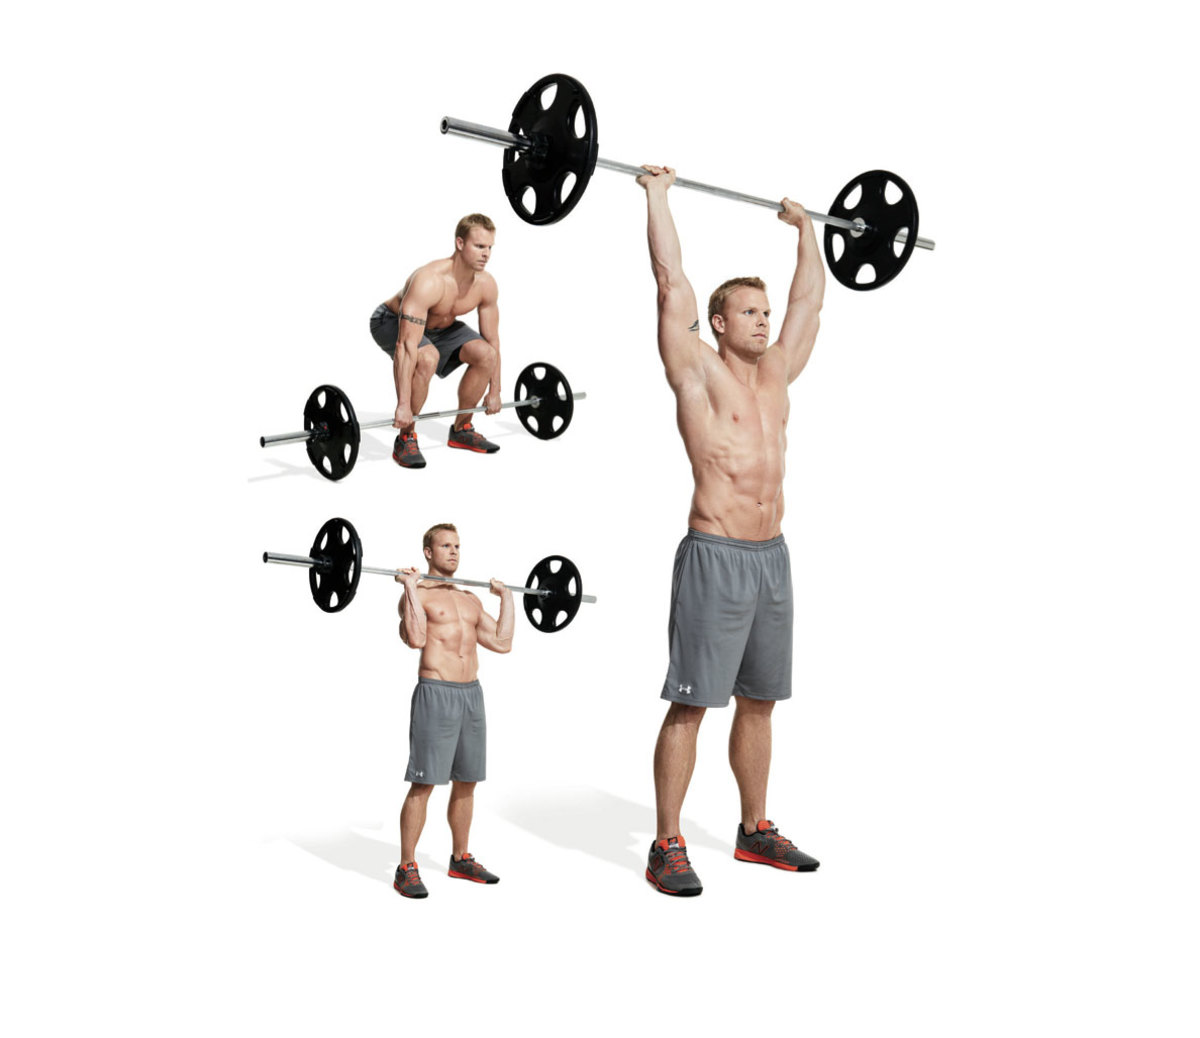 https://www.mensjournal.com/.image/t_share/MTk2MTM3MzUyMTE5MTMzMzI5/101-best-workouts-the-best-barbell-only-shoulder-workout-clean-and-press.jpg